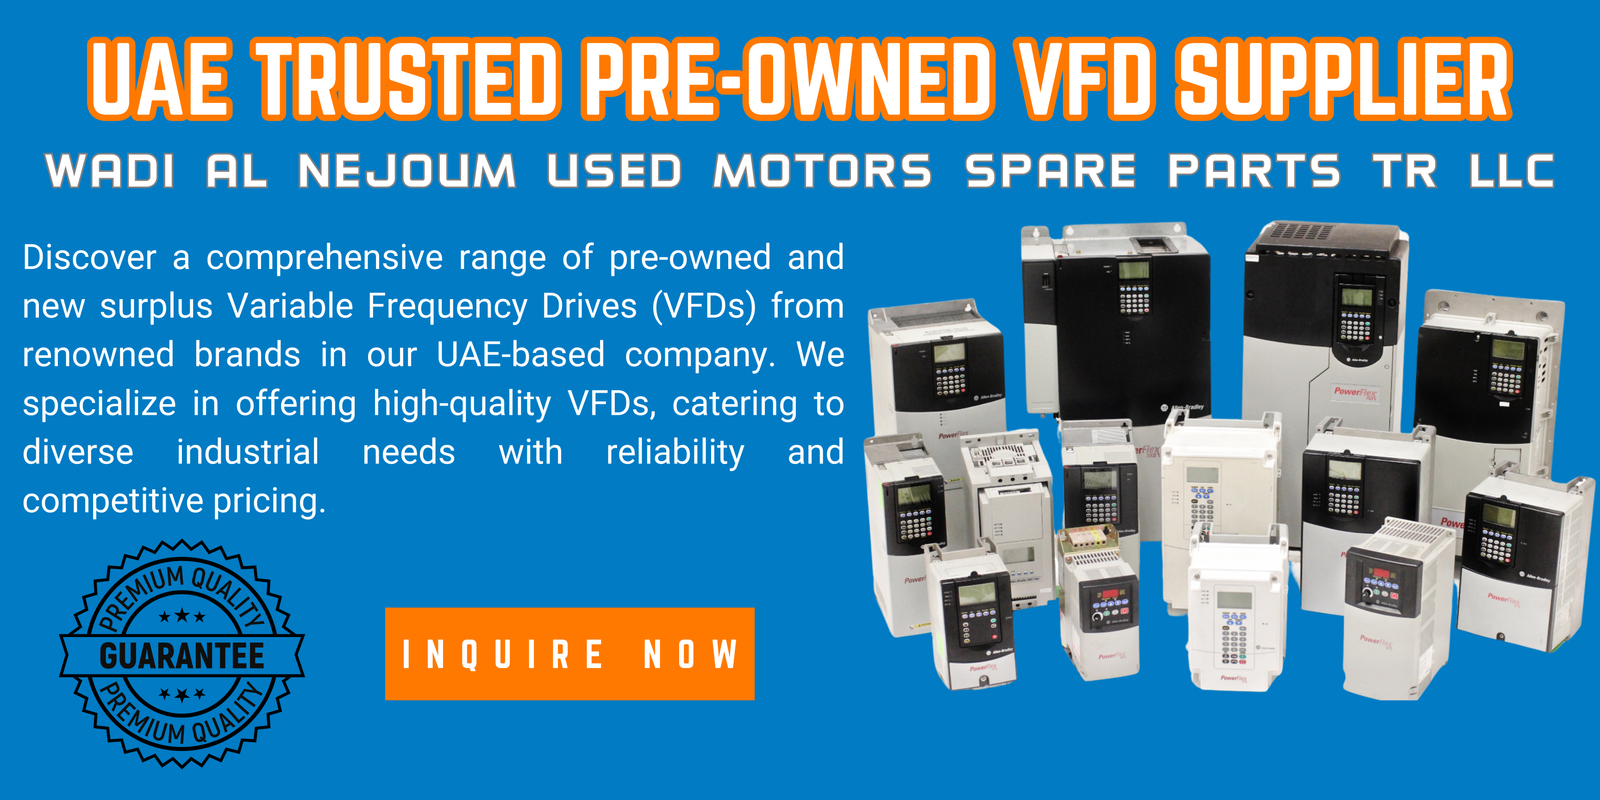 Pre-owned new surplus VFD supplier in UAE